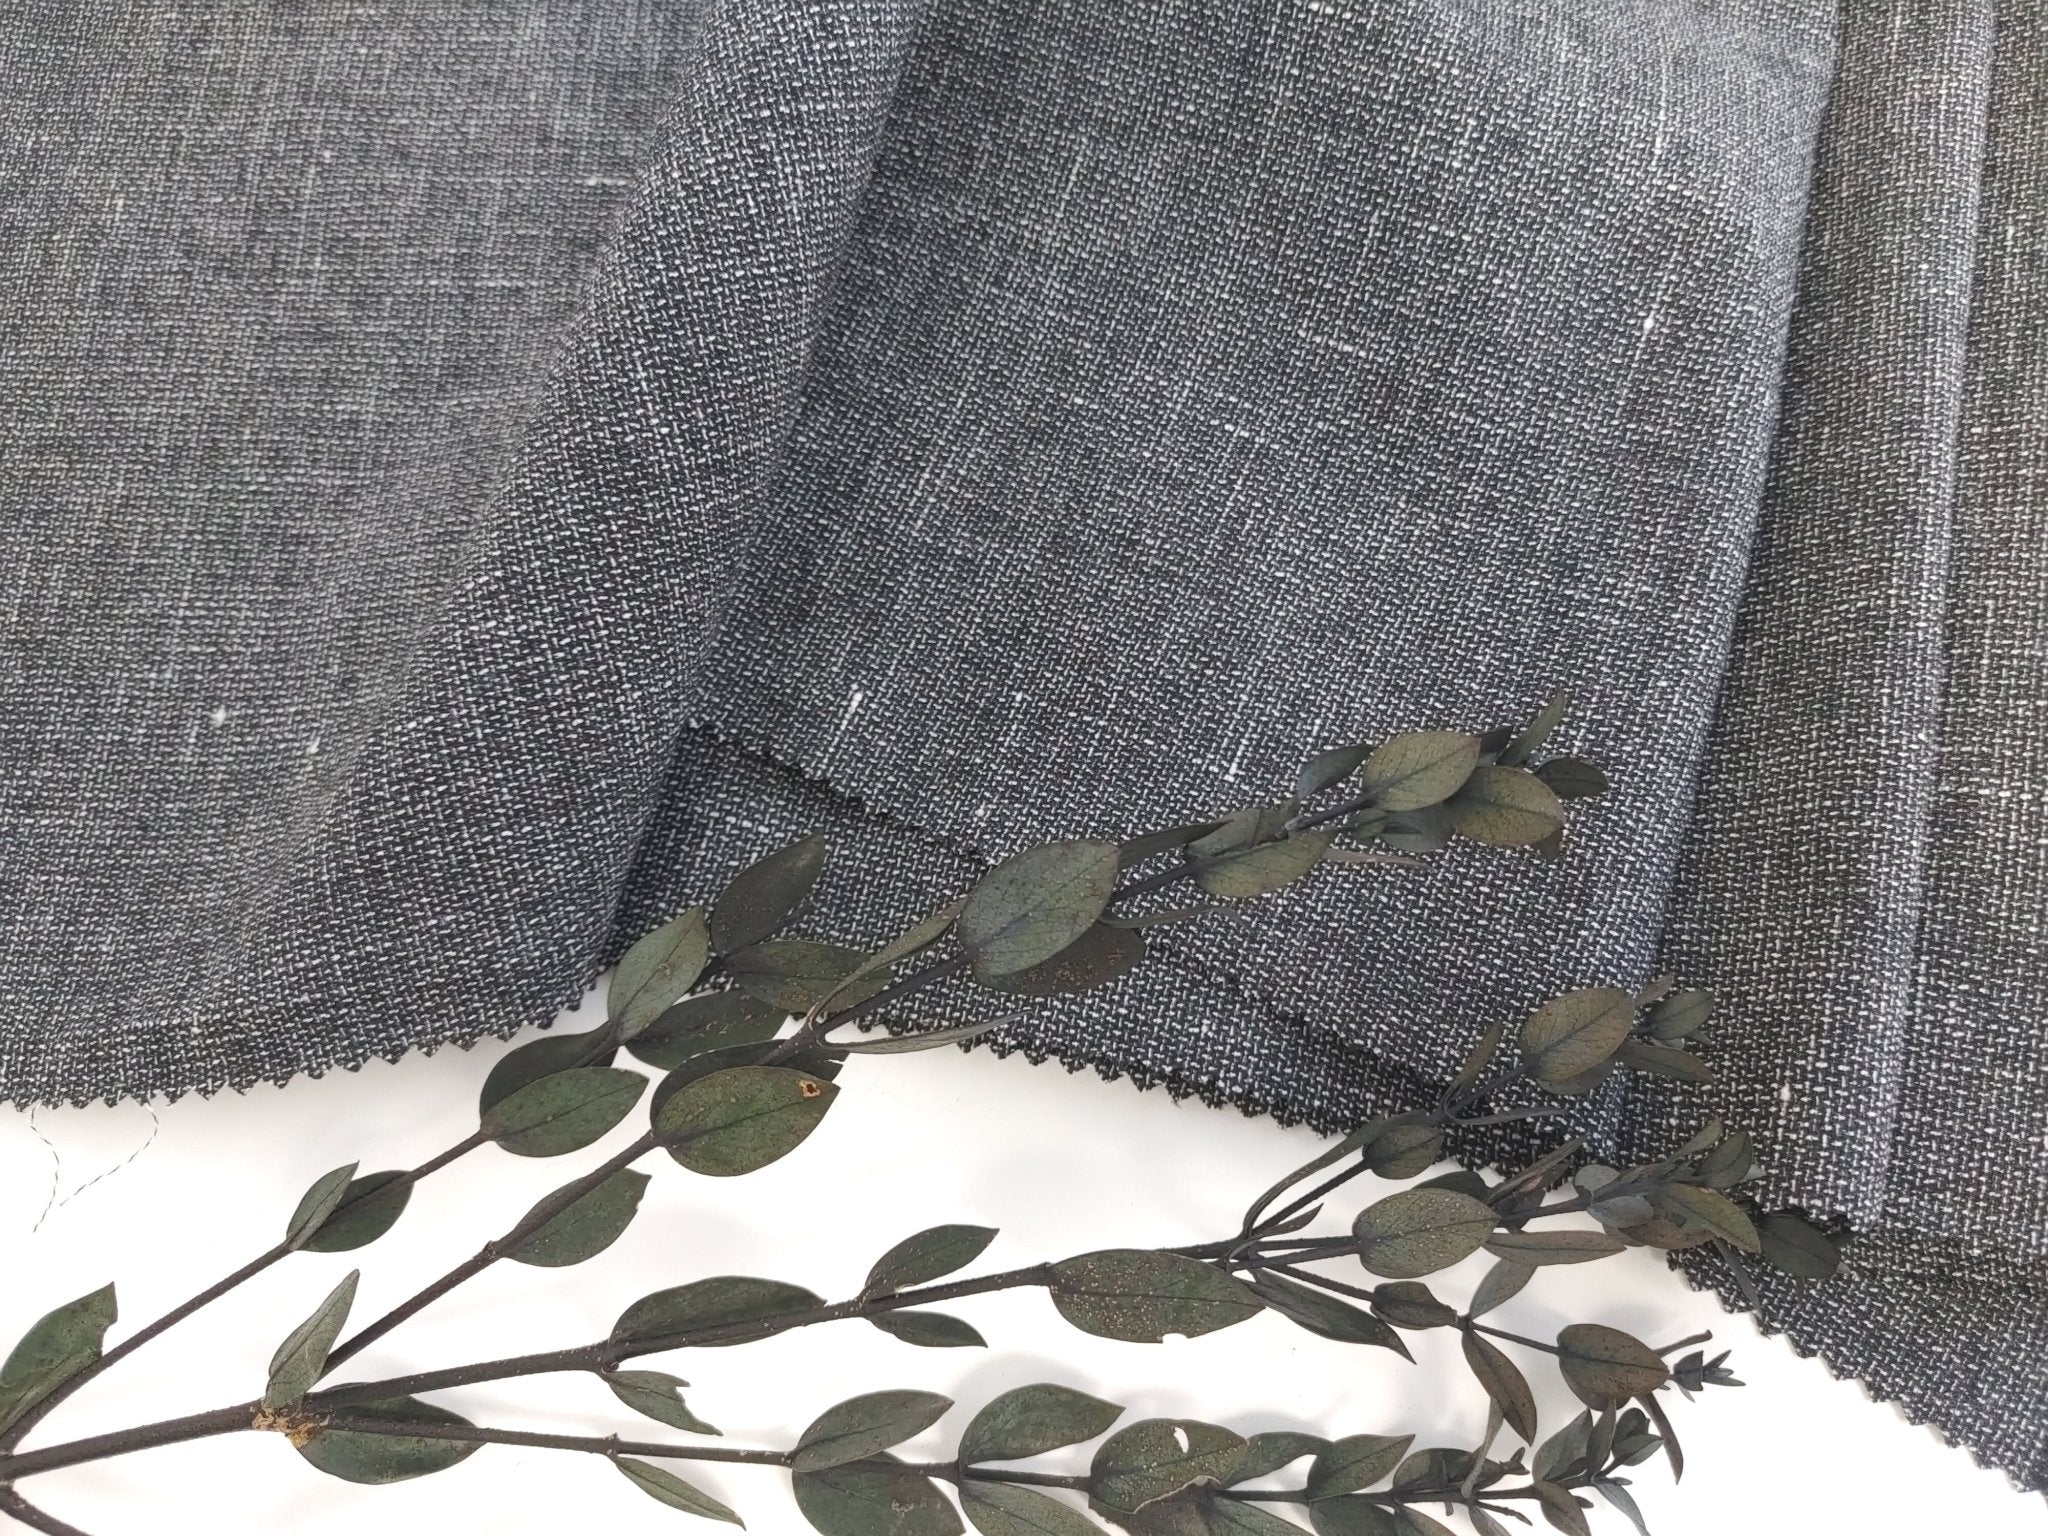 Monochrome Linen Stretch Dobby Fabric 6117 - The Linen Lab - Grey